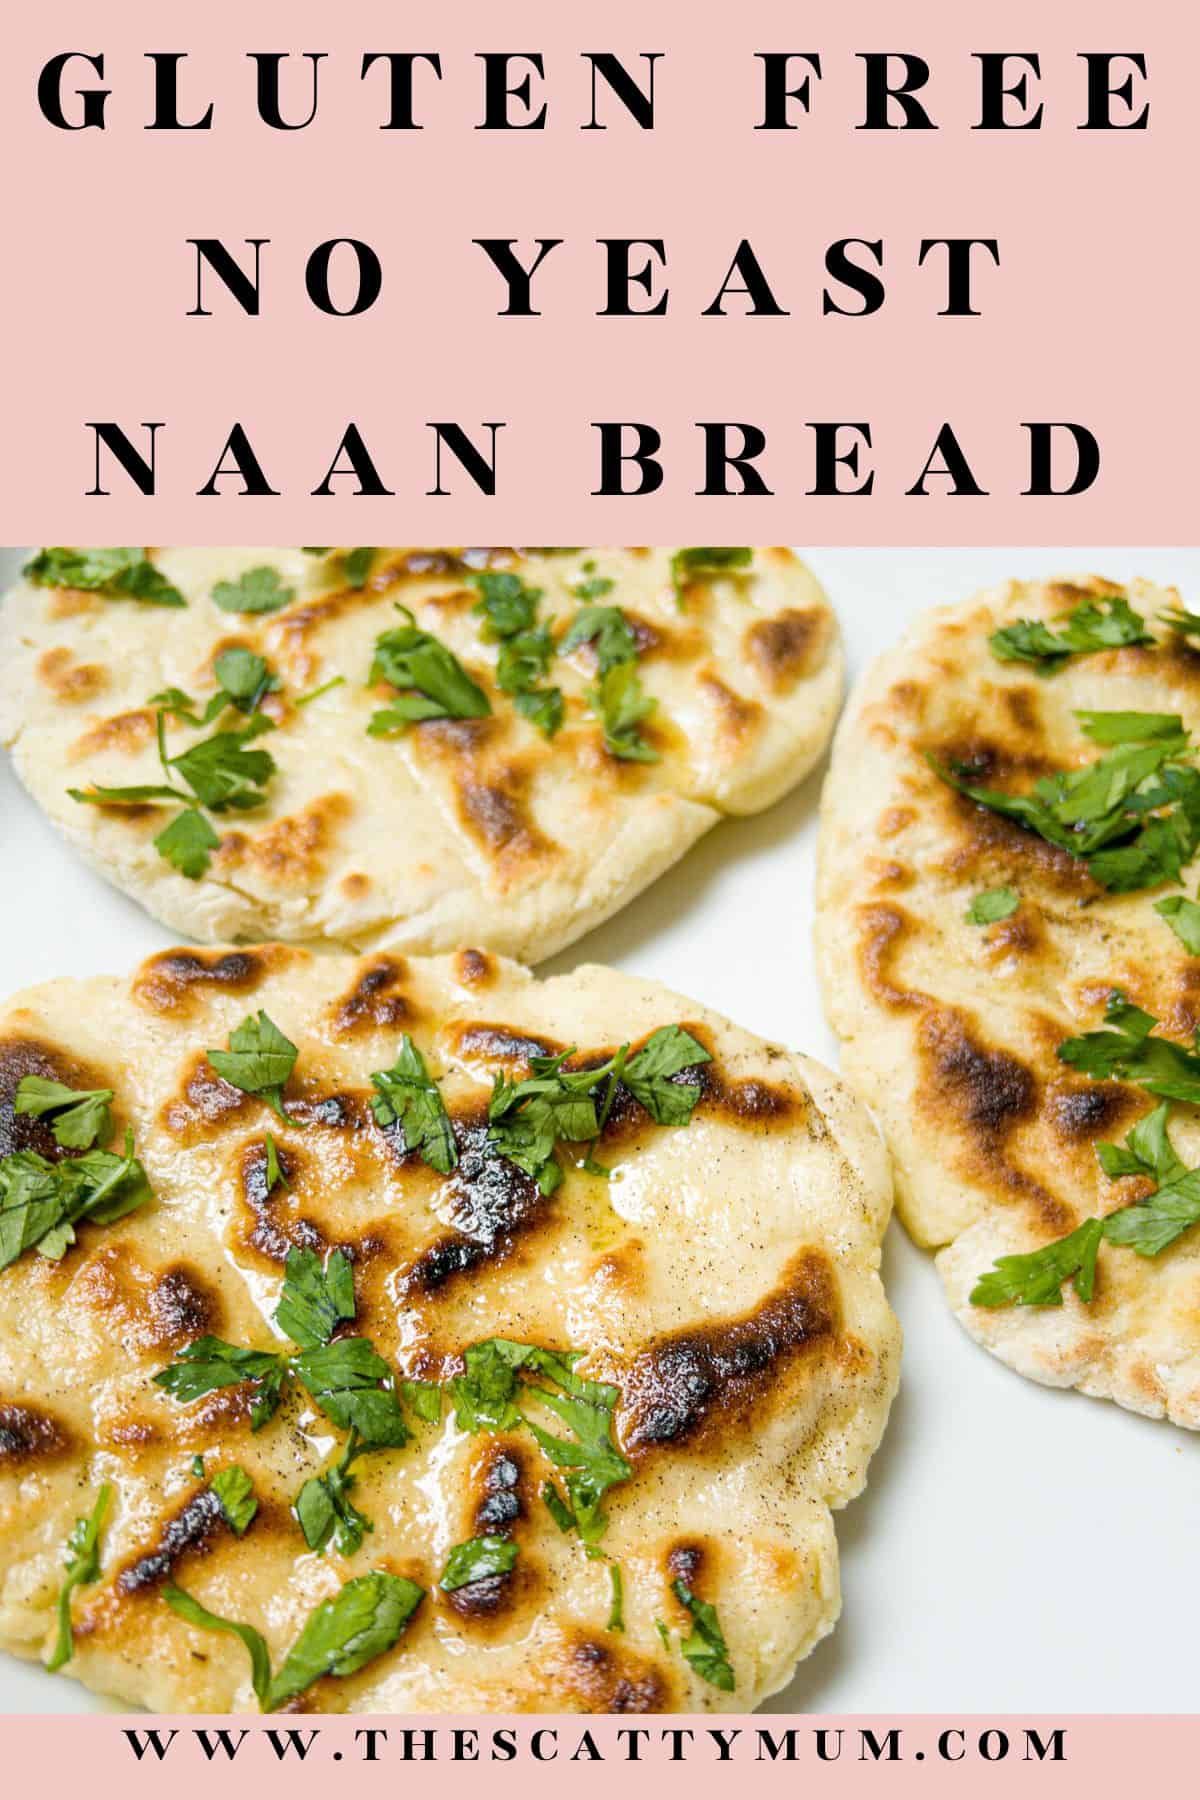 Pinterest image for gluten. free naan bread.